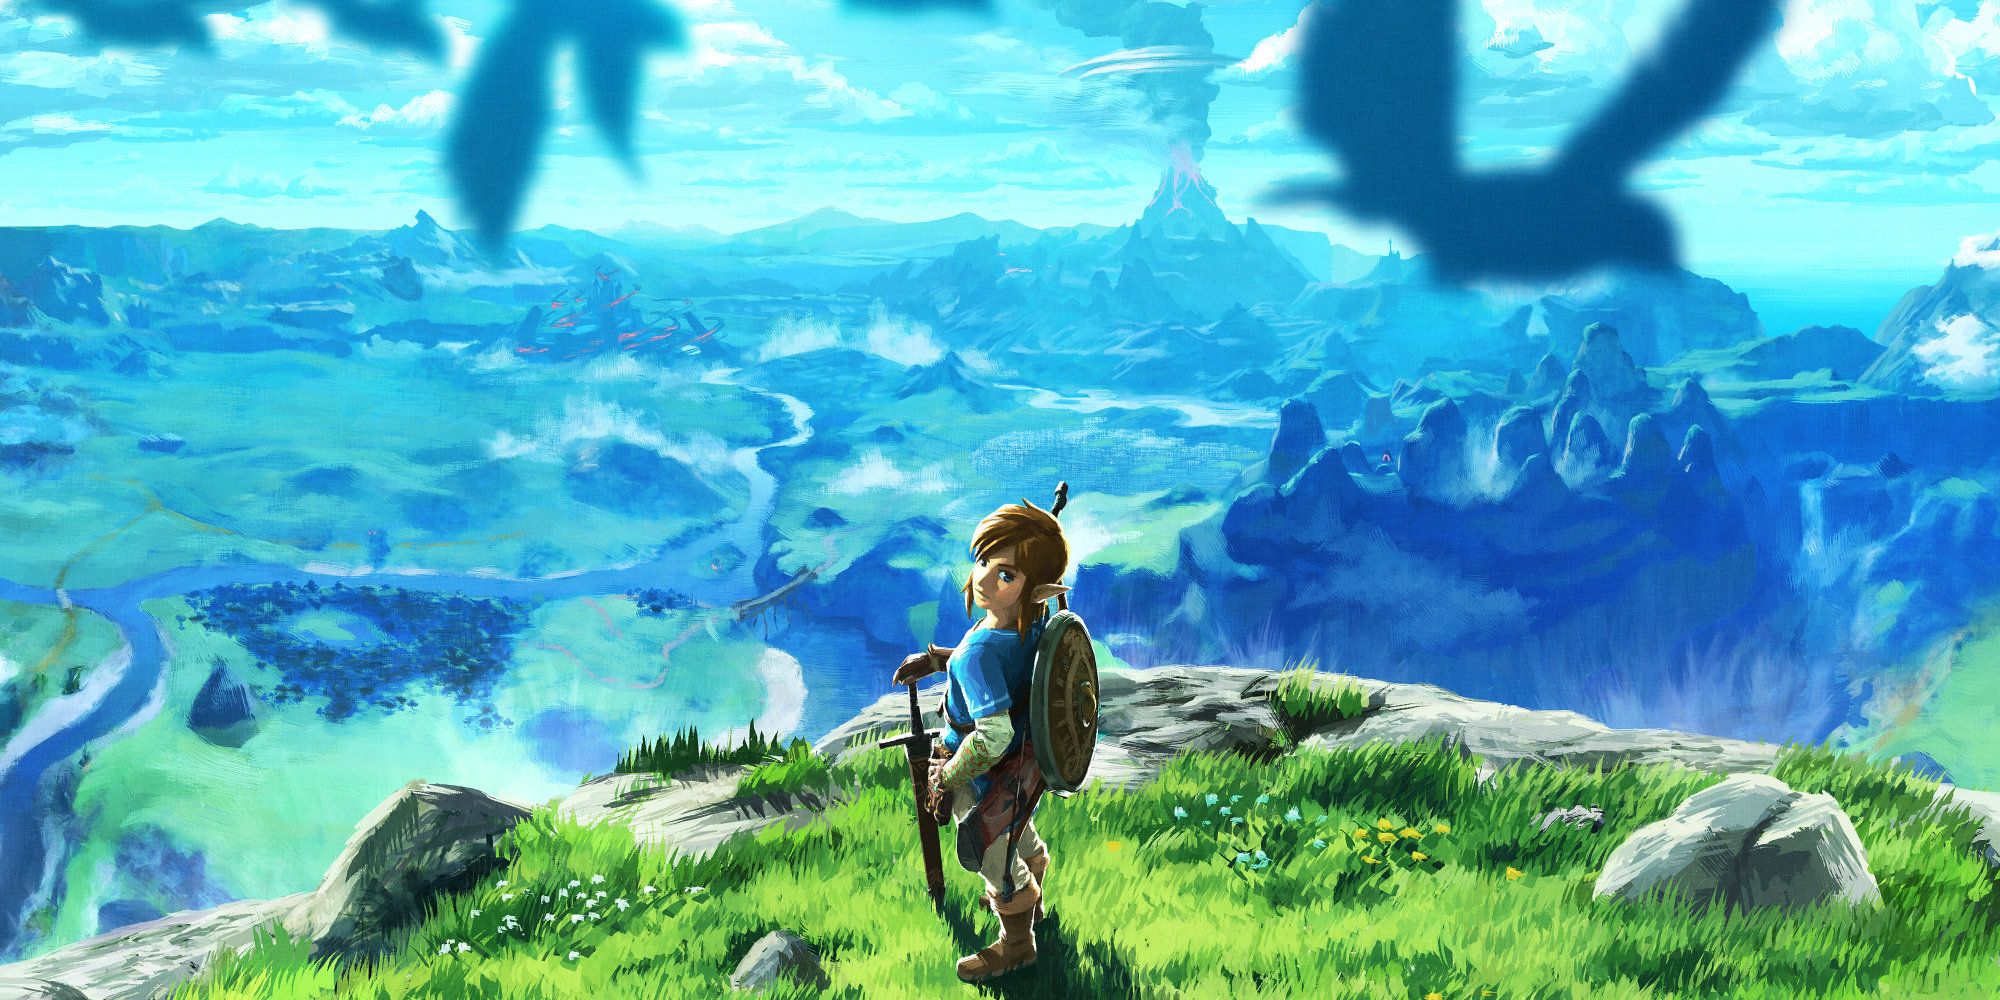 Link overlooking Hyrule in Breath of the Wild.